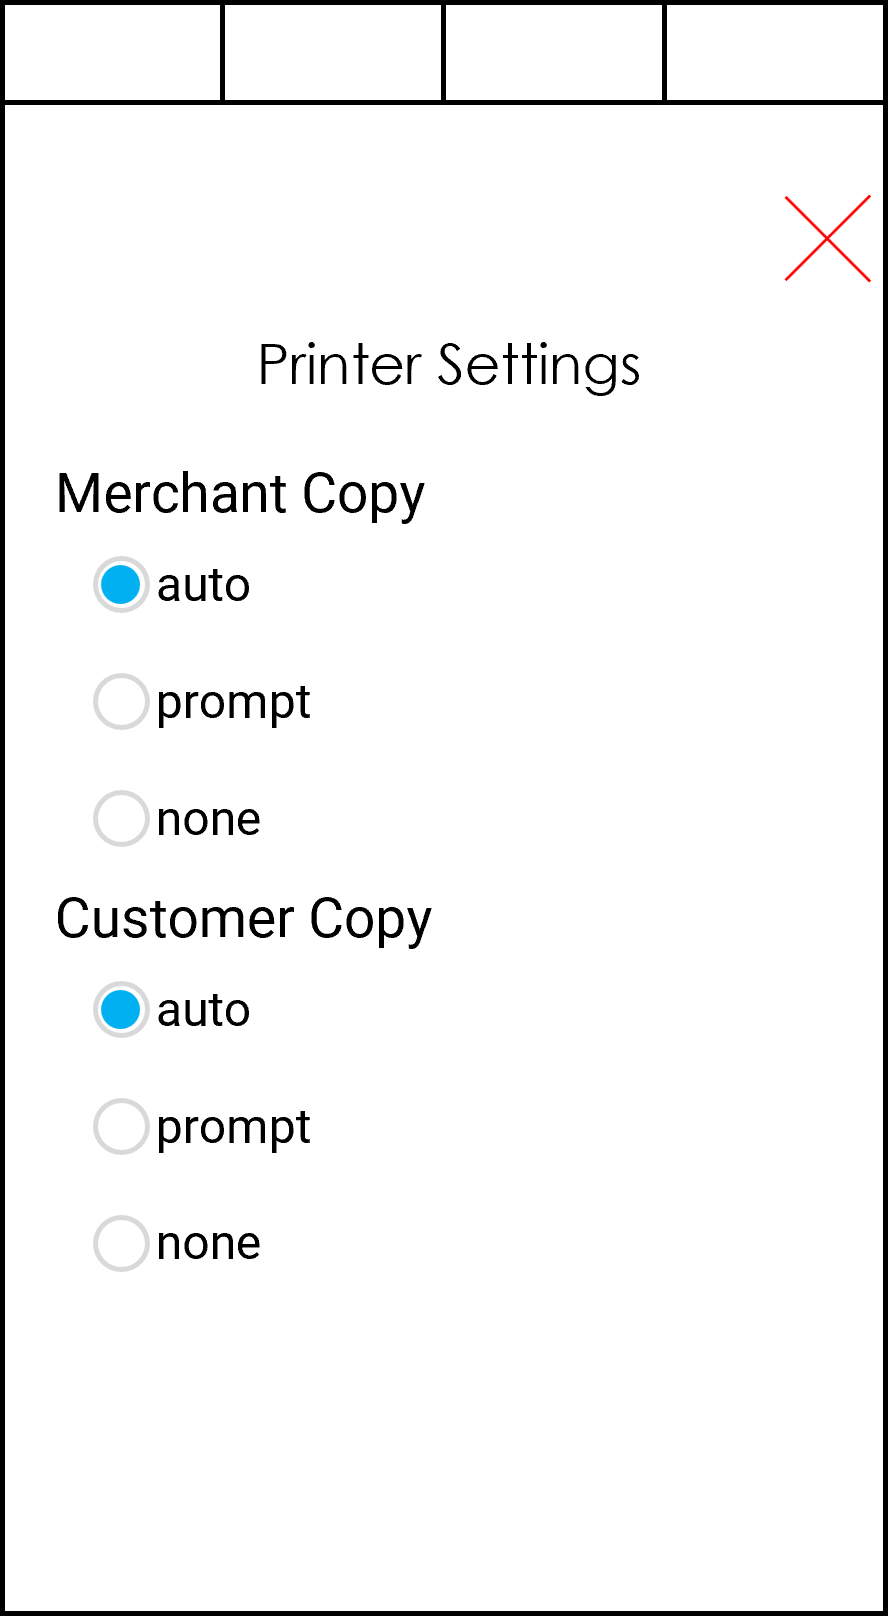 smartpos-printersettings-01-2506-en.png